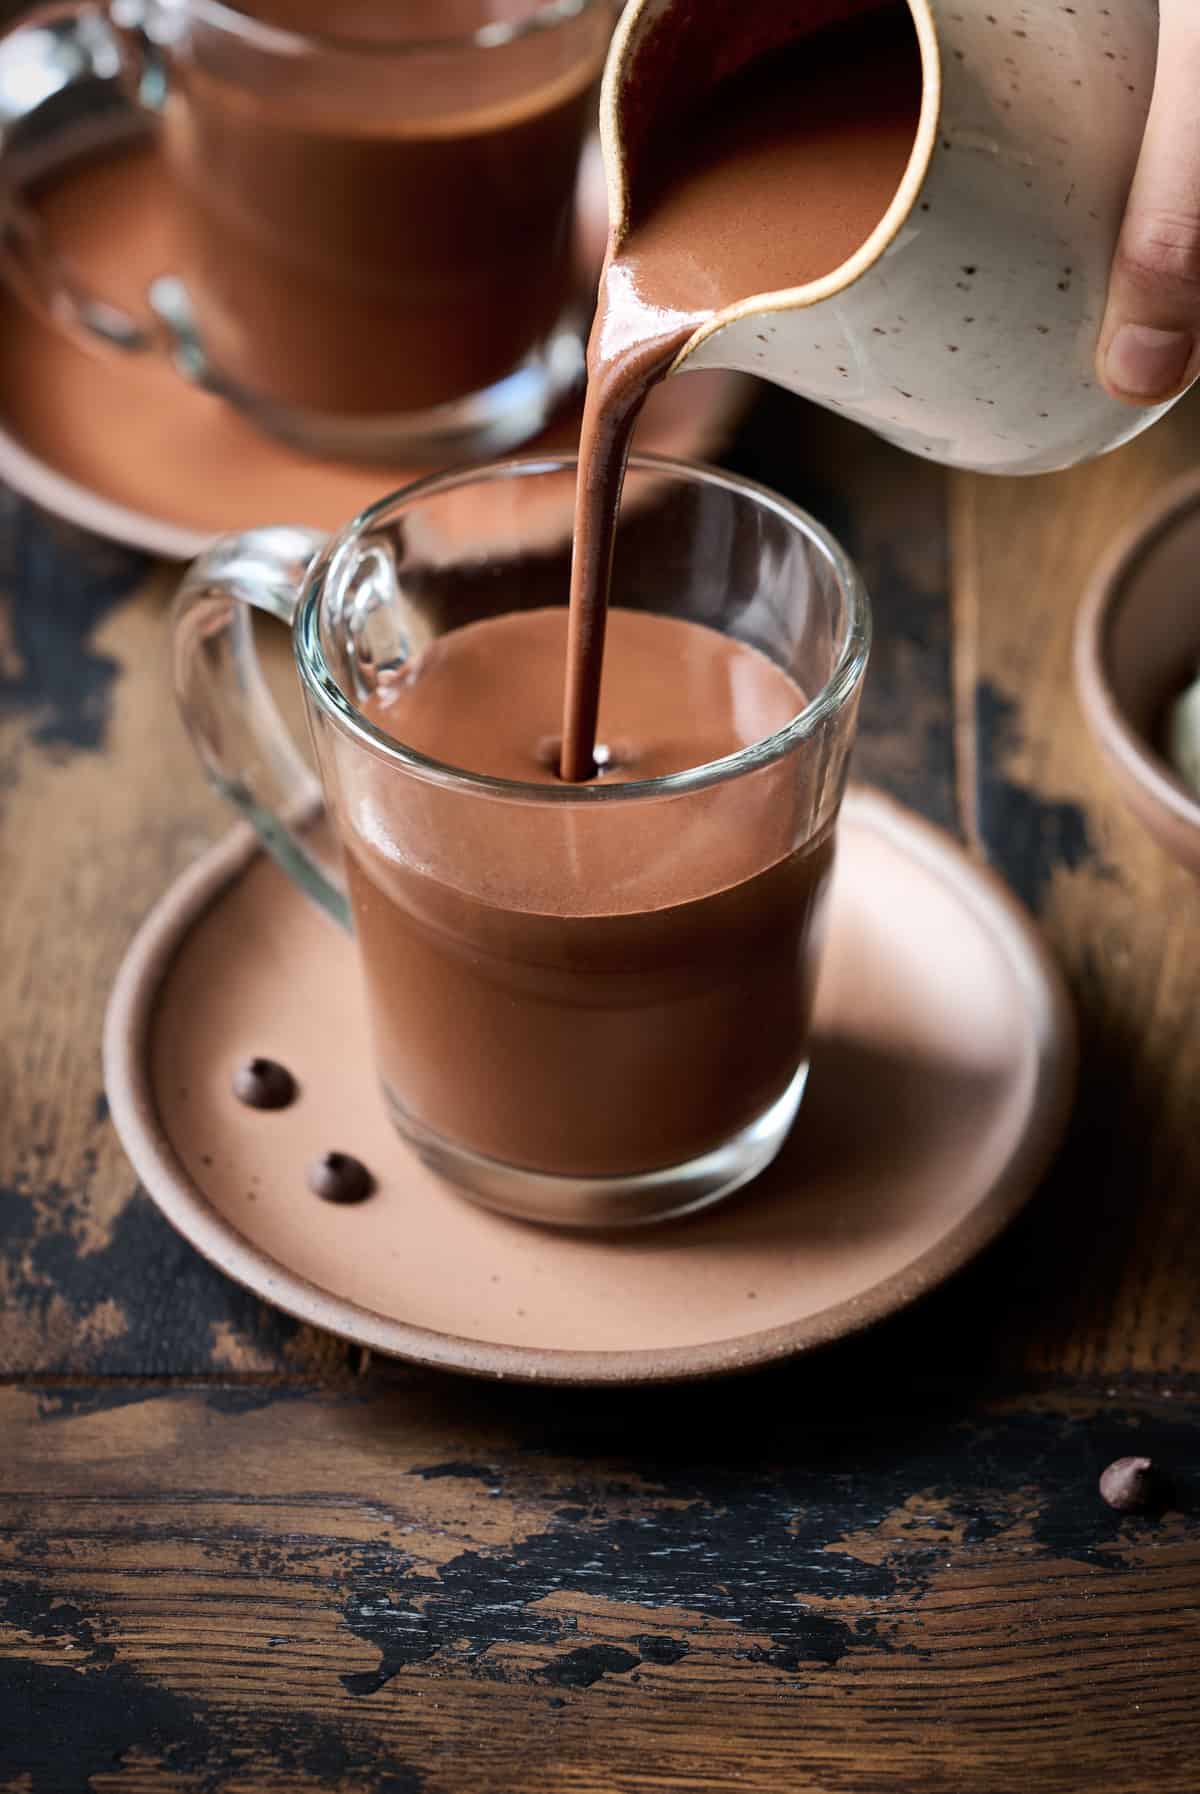 https://rainbowplantlife.com/wp-content/uploads/2022/12/Hot-chocolate-cover-image-1-of-1.jpg